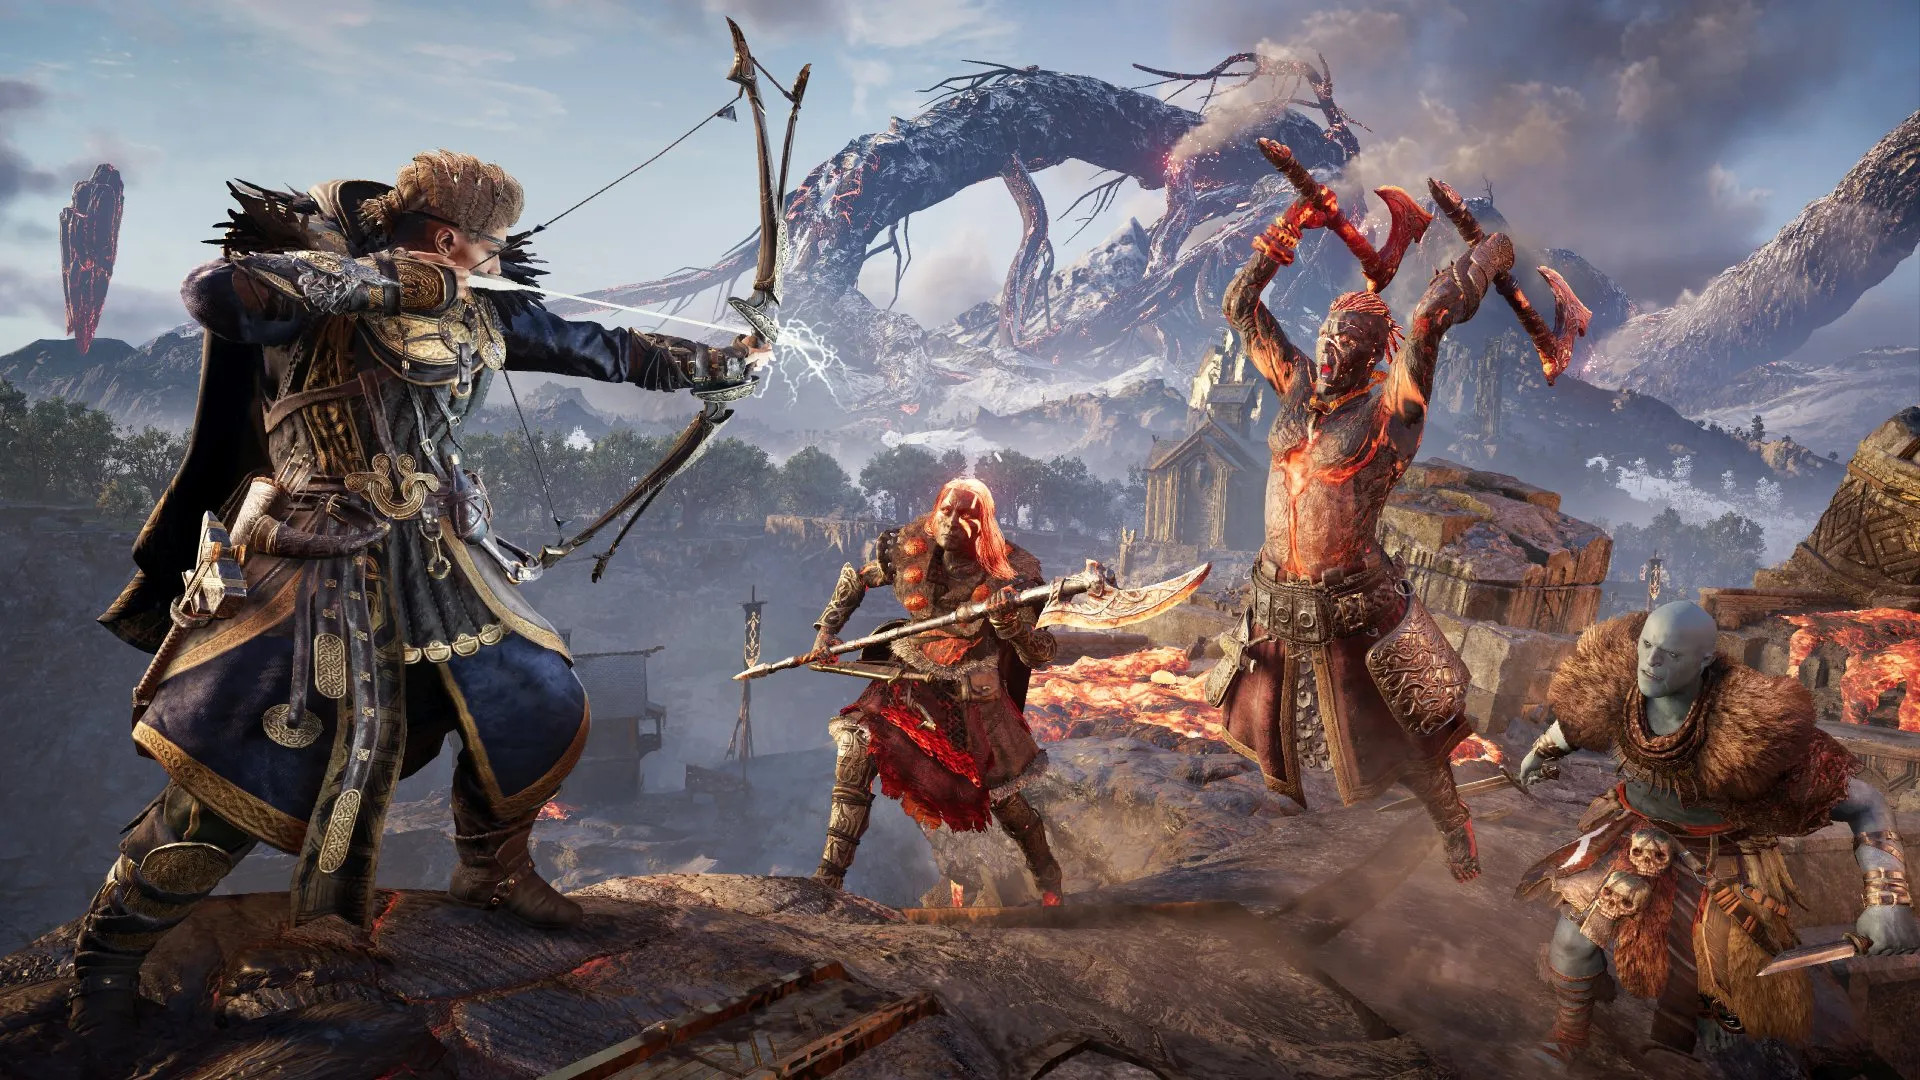 Havi fighting fire enemies in Assassin's Creed Valhalla: Dawn of Ragnarok